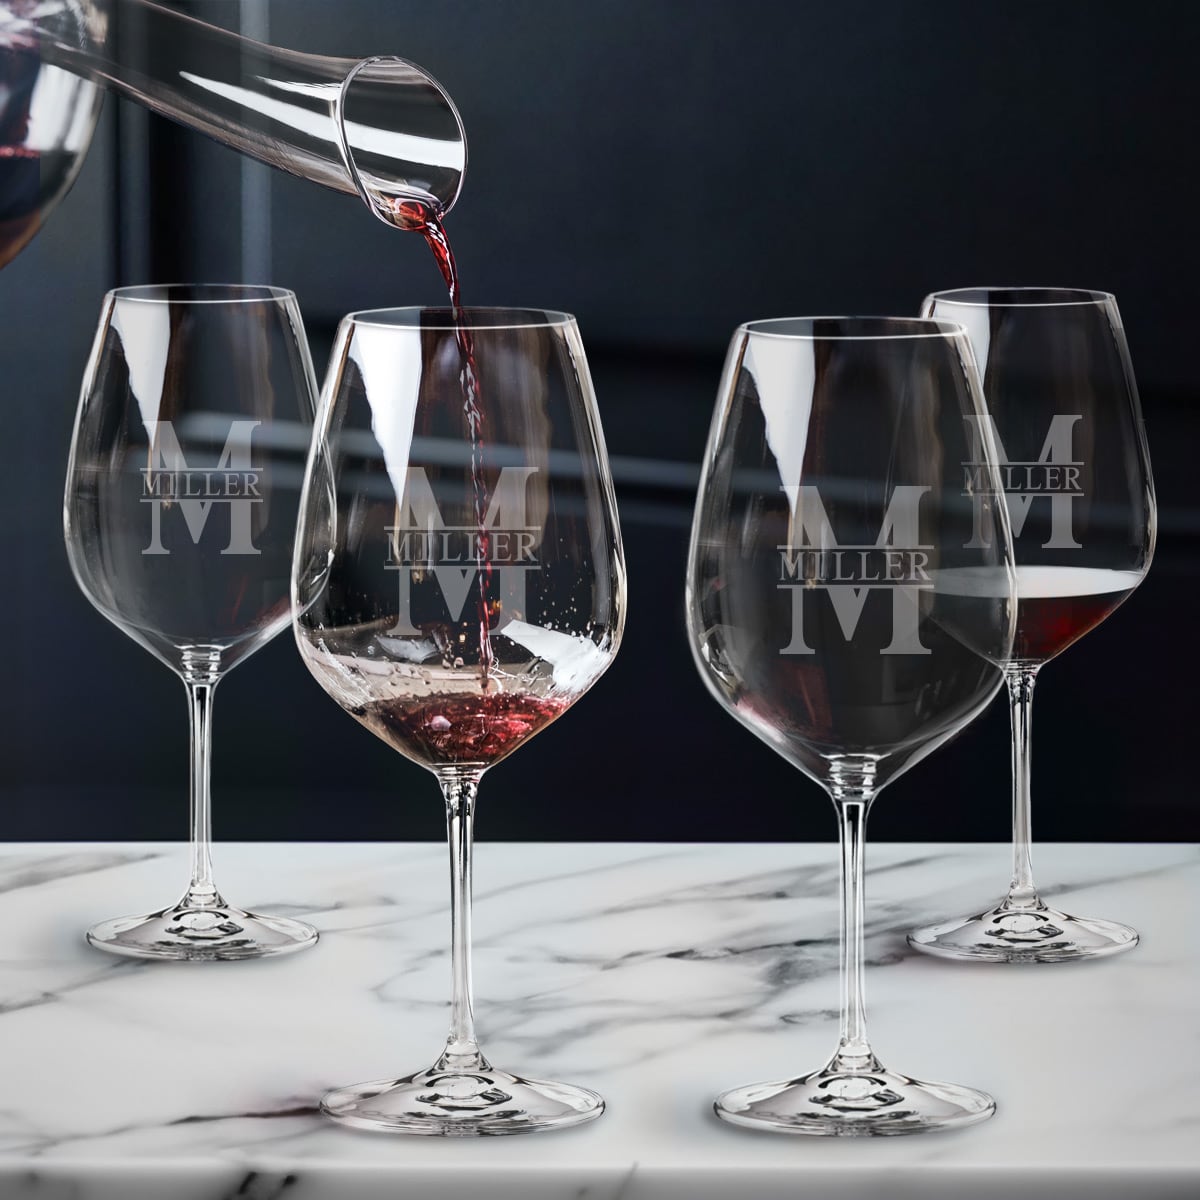 Riedel Wine Glasses, Engraved, Set of 4 - Cabernet/Red Wine Glasses